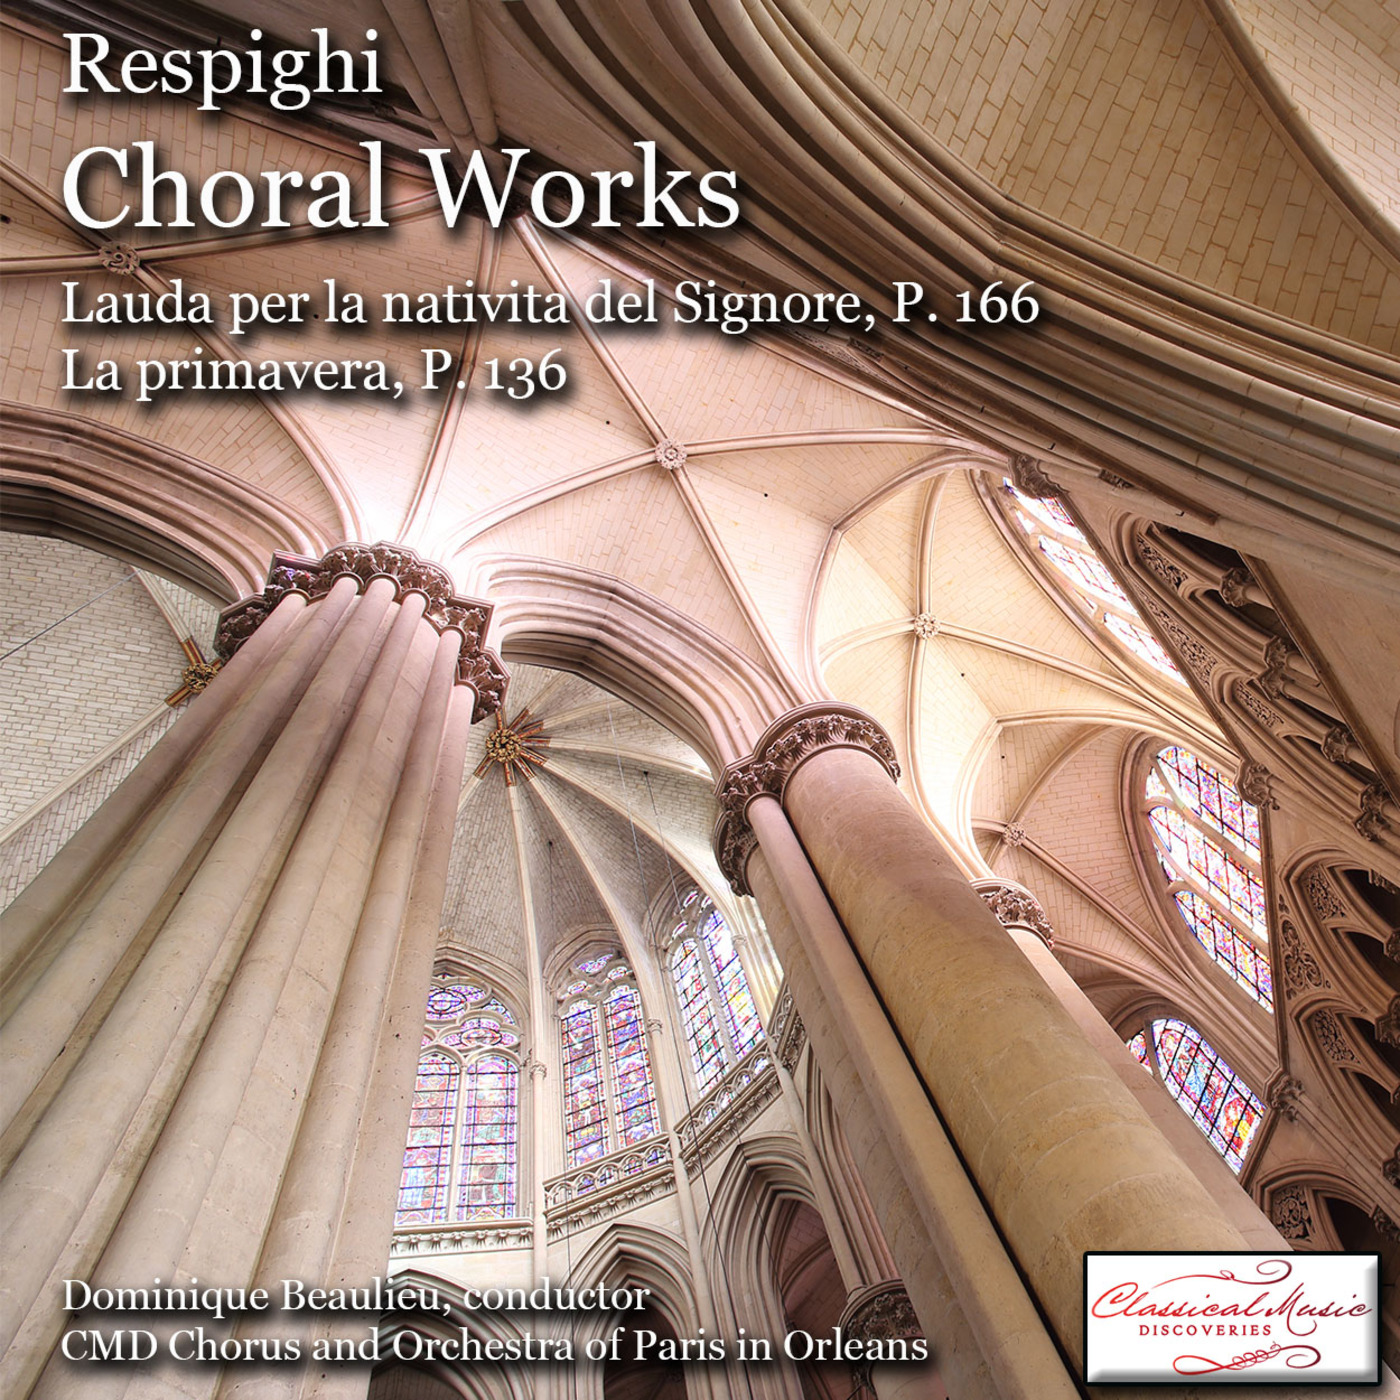 Episode 98: 17098 Respighi: Choral Works